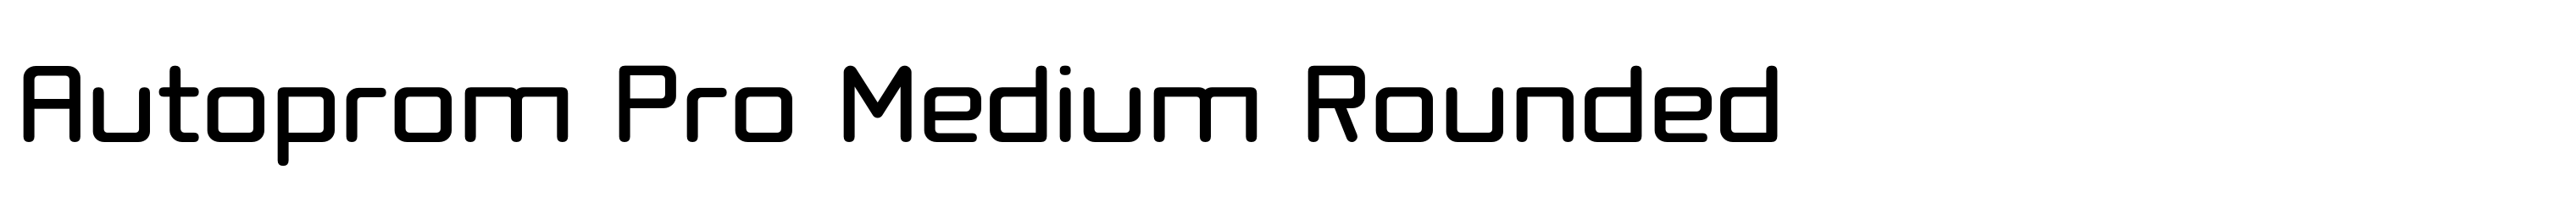 Autoprom Pro Medium Rounded